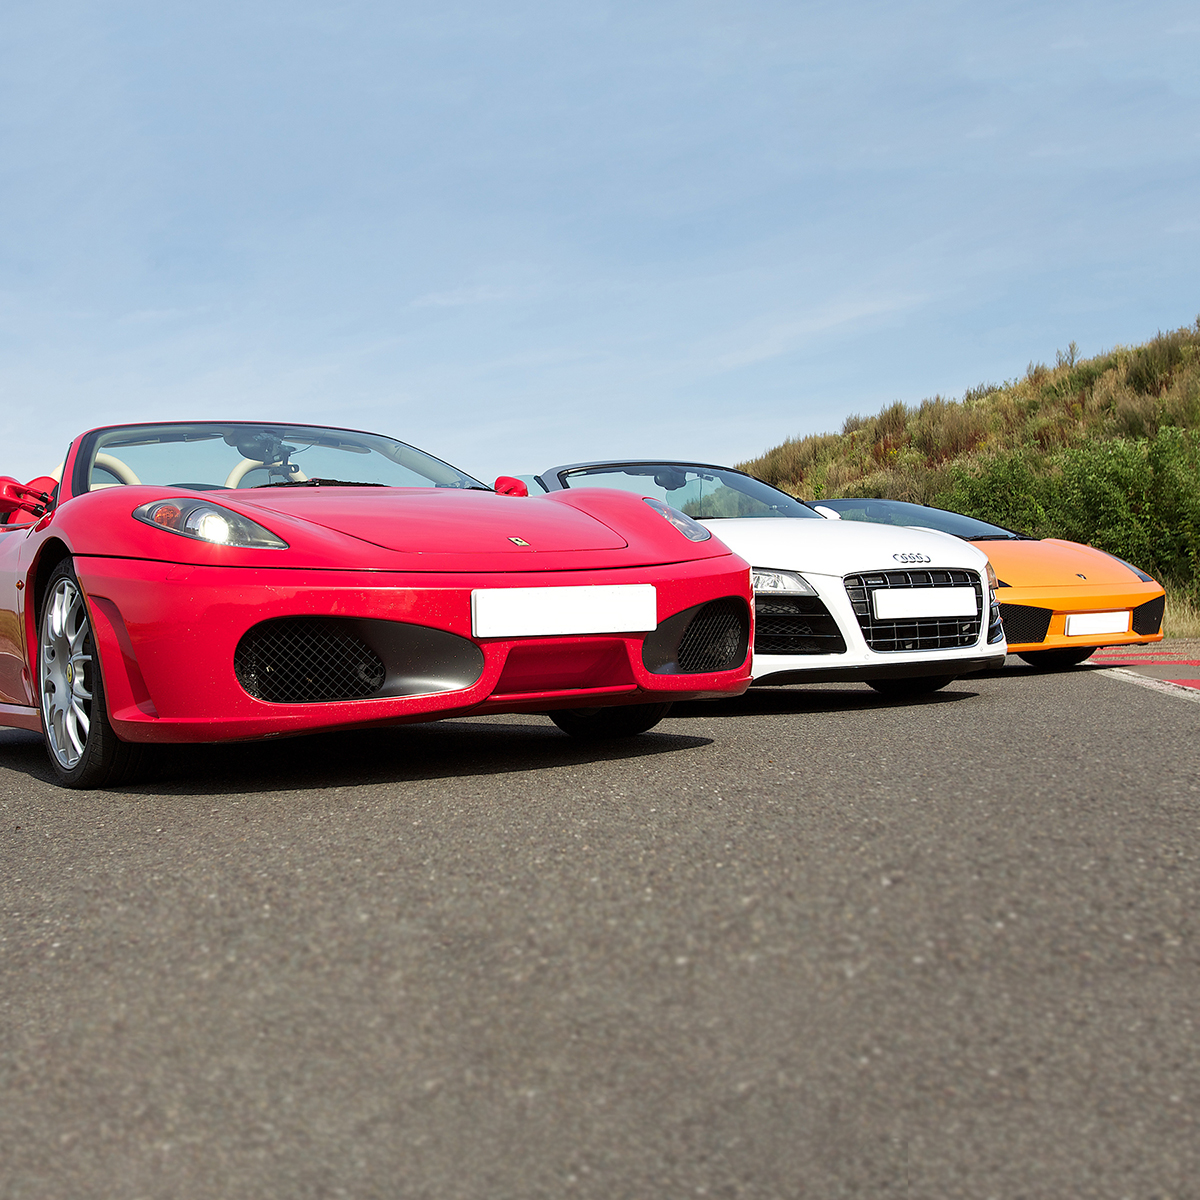 Super car driving experience - Ferrari, Aston Martin, Lamborghini or Audi R8